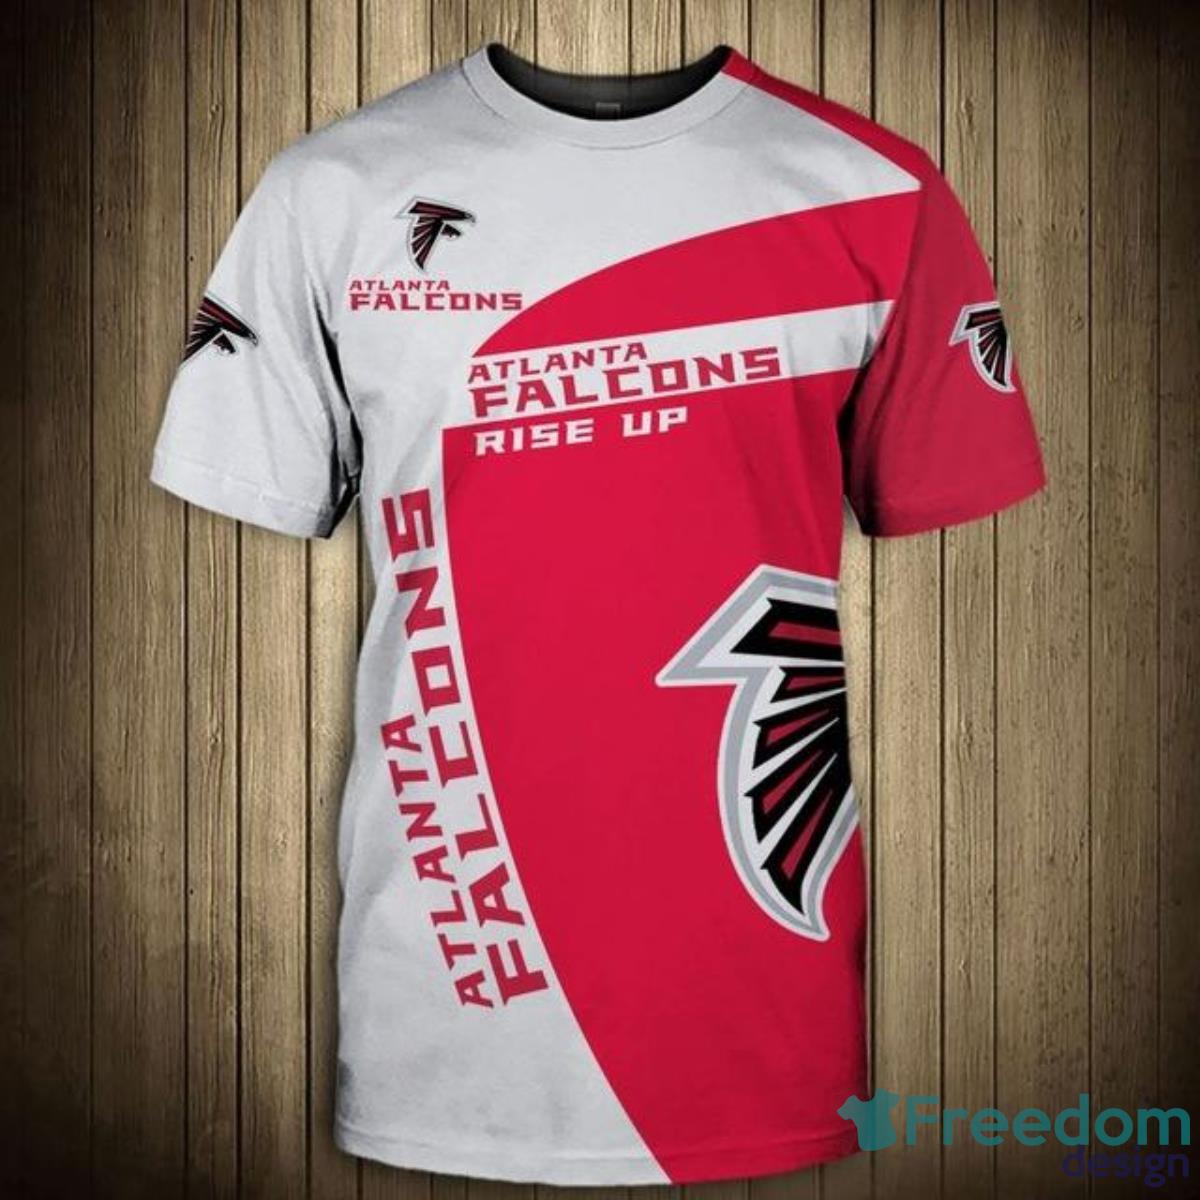 Atlanta Falcons Shirt 3D Rise Up For Men And Women Product Photo 1